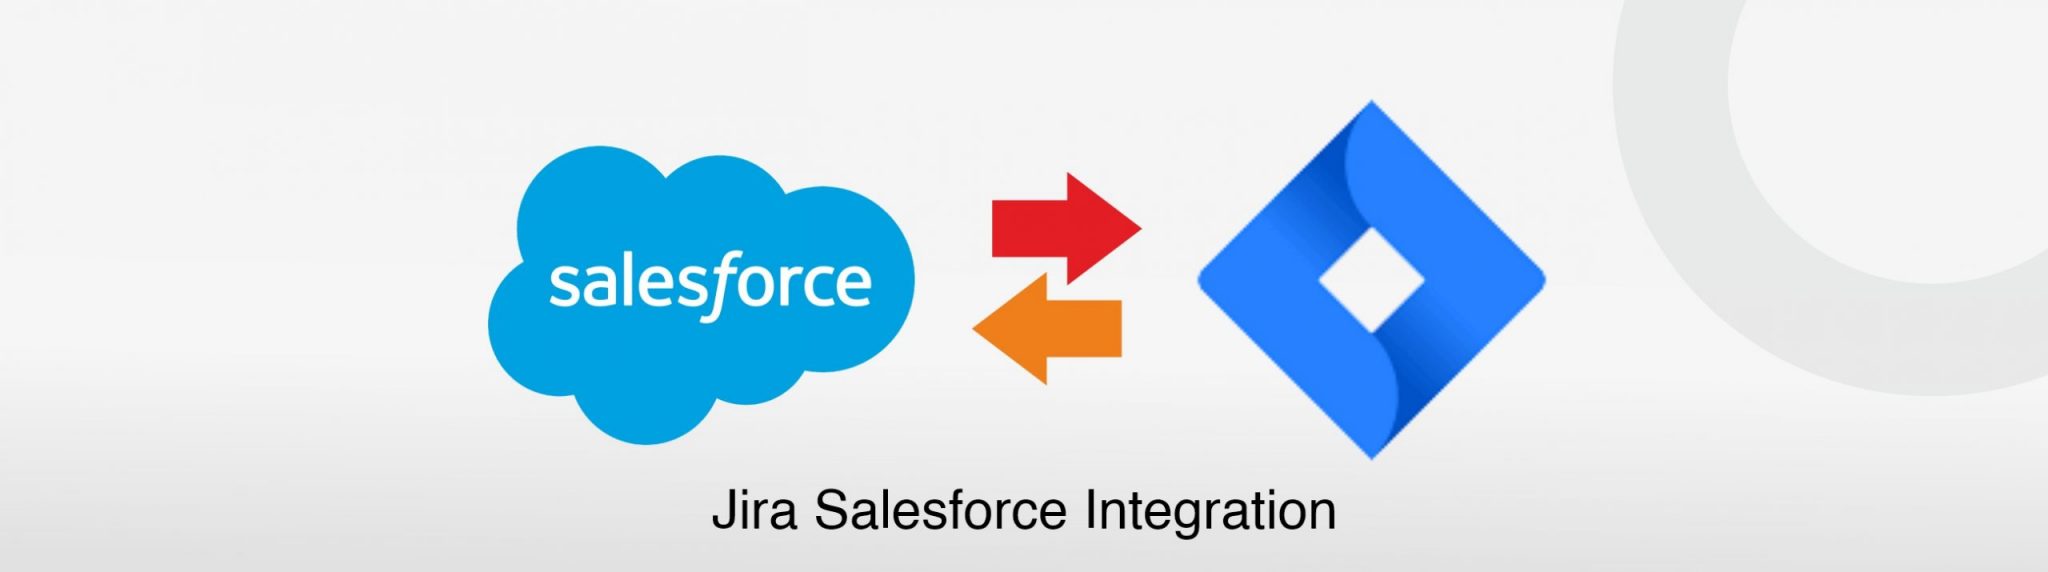 Jira-Salesforce-Integration-scaled-1-2048x572